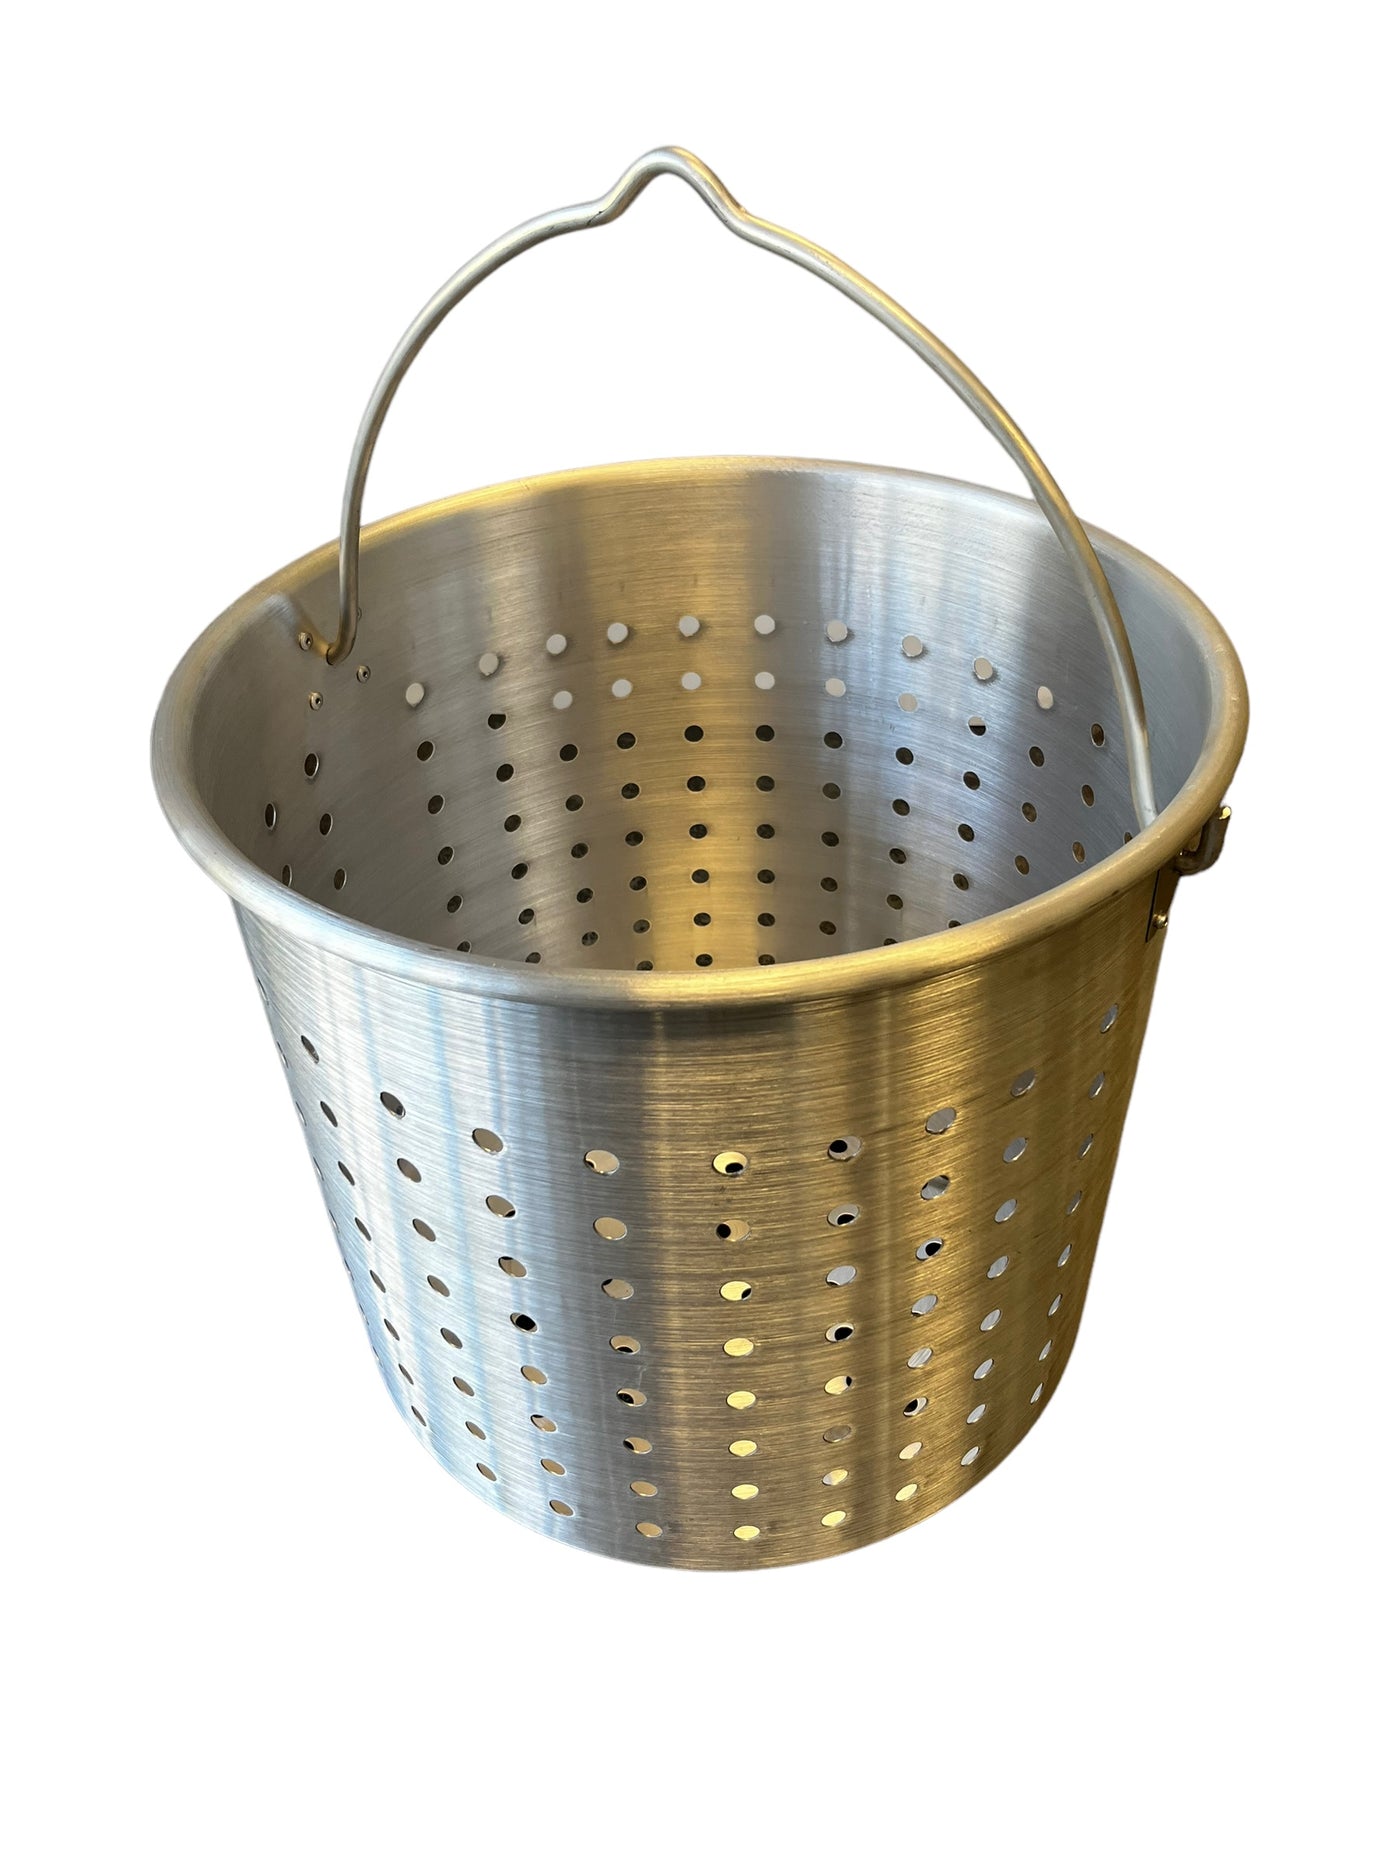 10.5 QT. Aluminum Pot with Basket